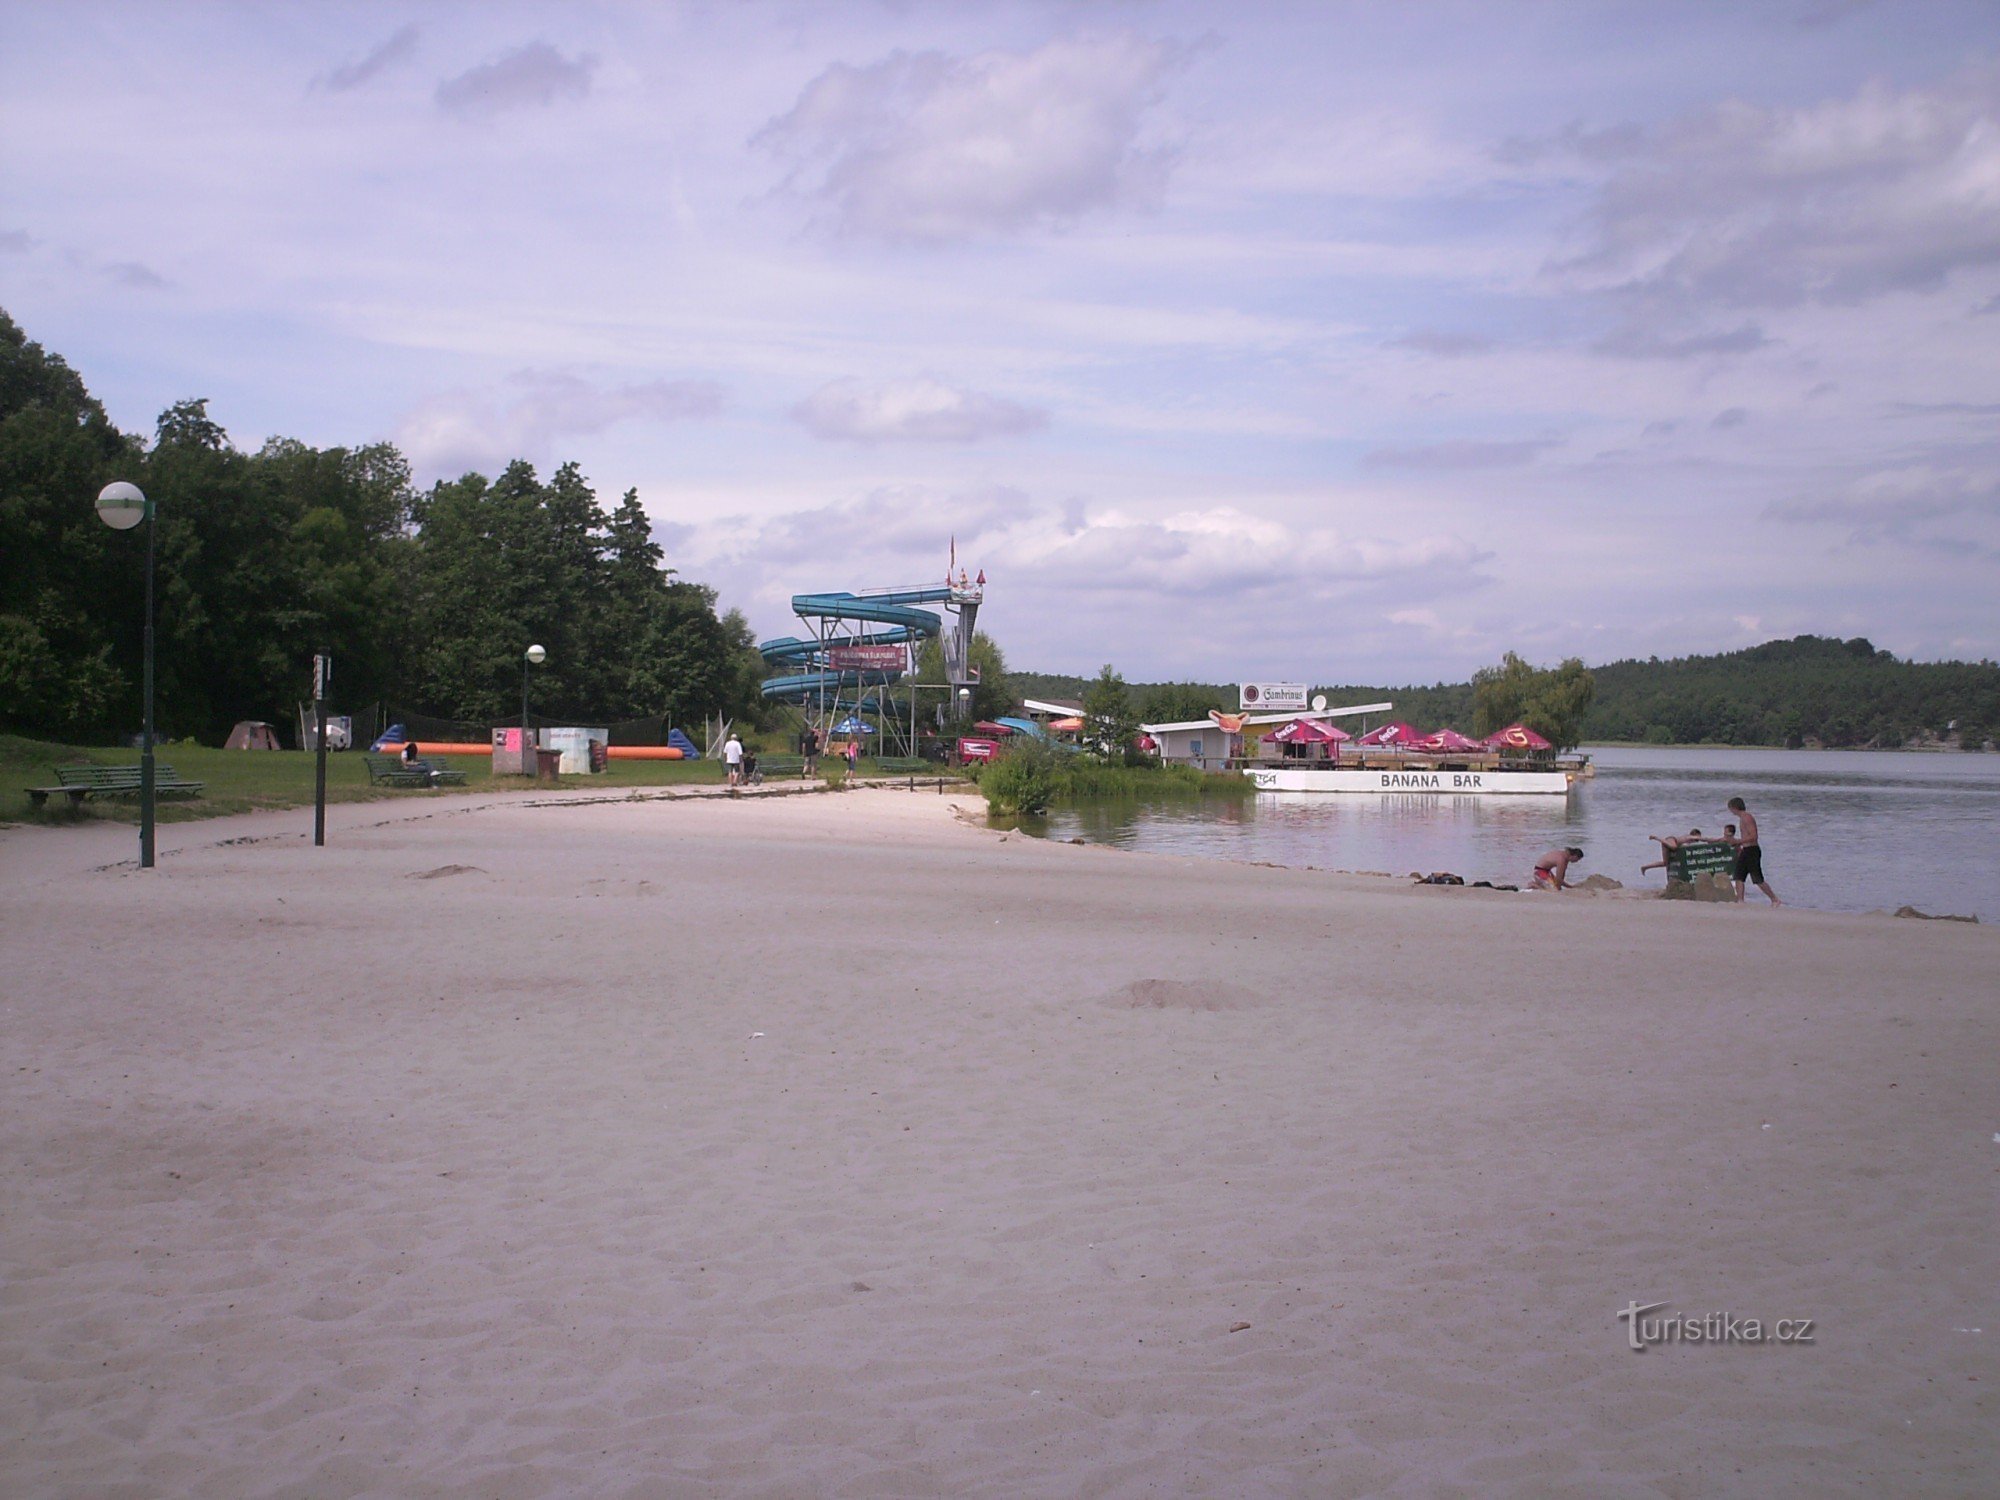 Máchovo jezero - the main beach of Doksa